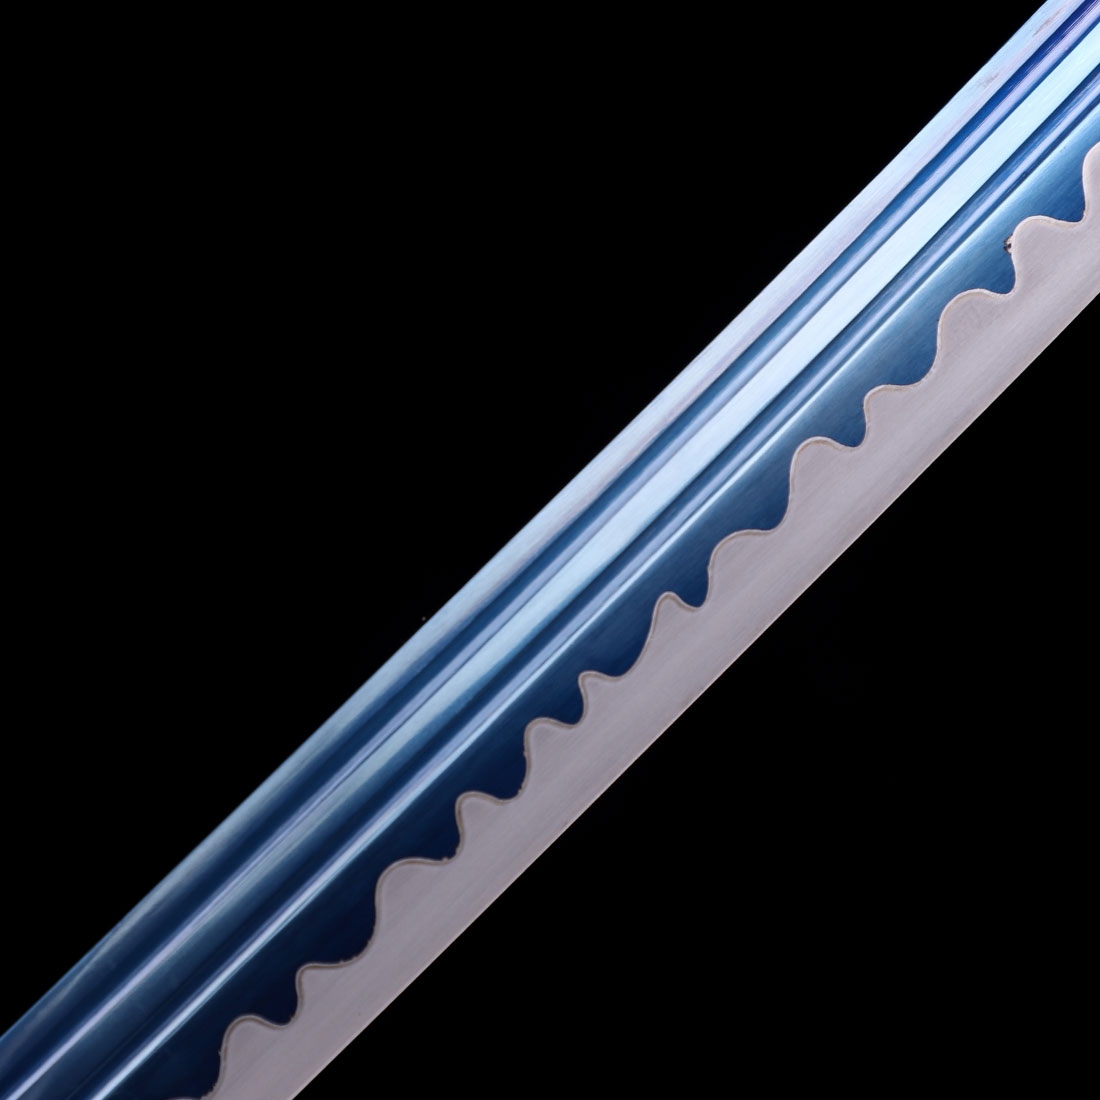 41 Sephiroth Masamune Katana Sword in Just $88 (Japanese Steel is